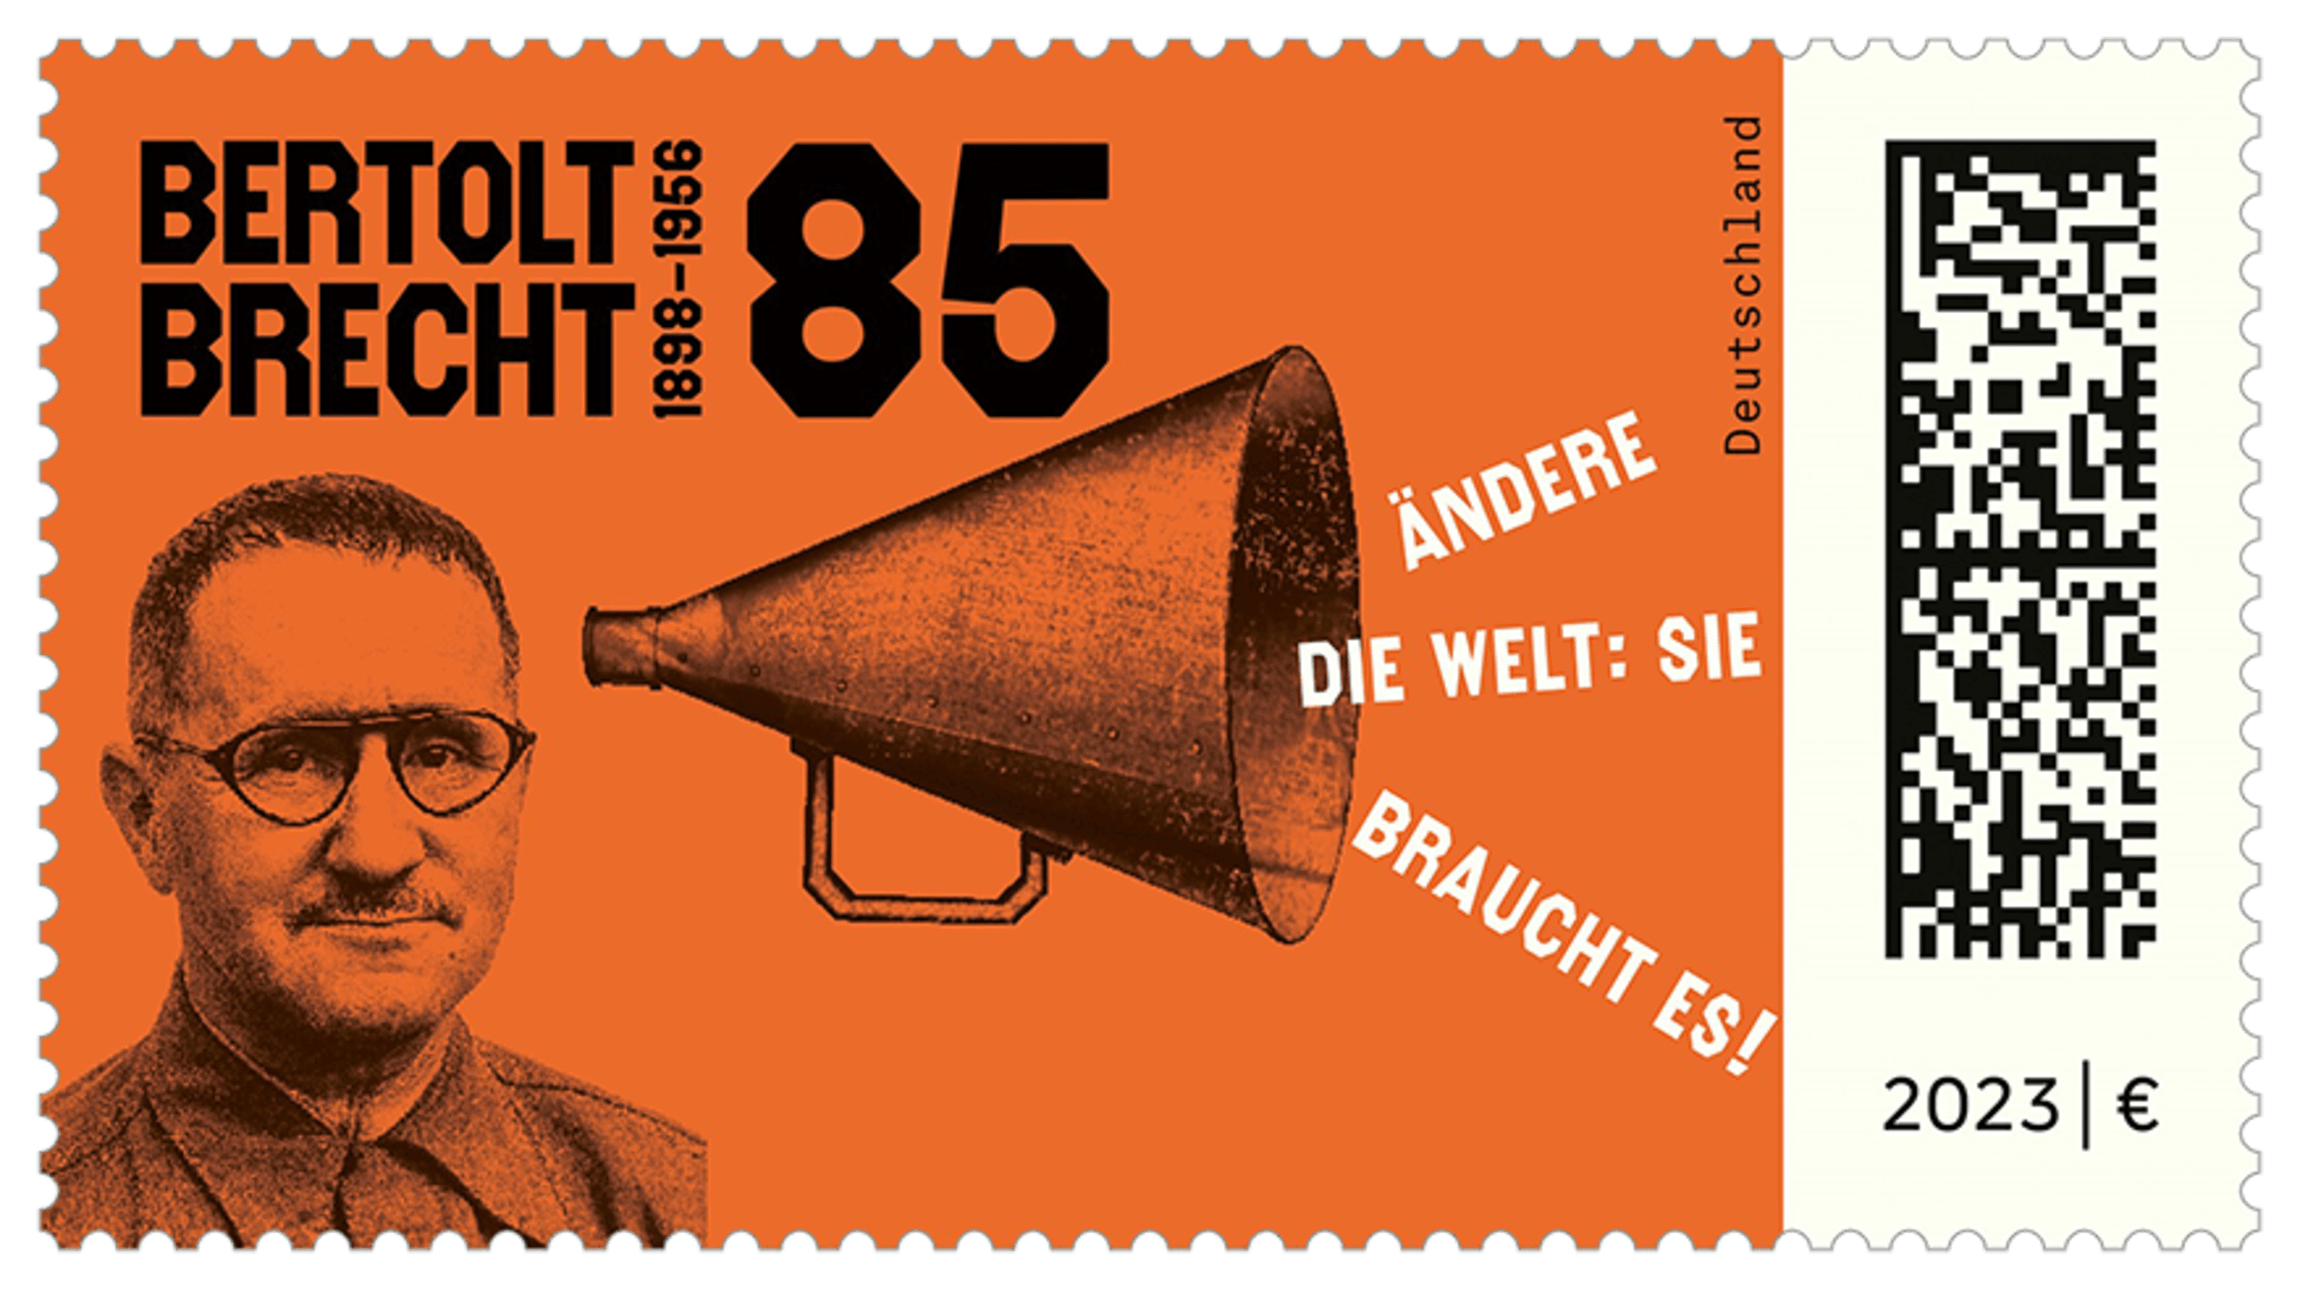 Bertold Brecht-Briefmarke 2023